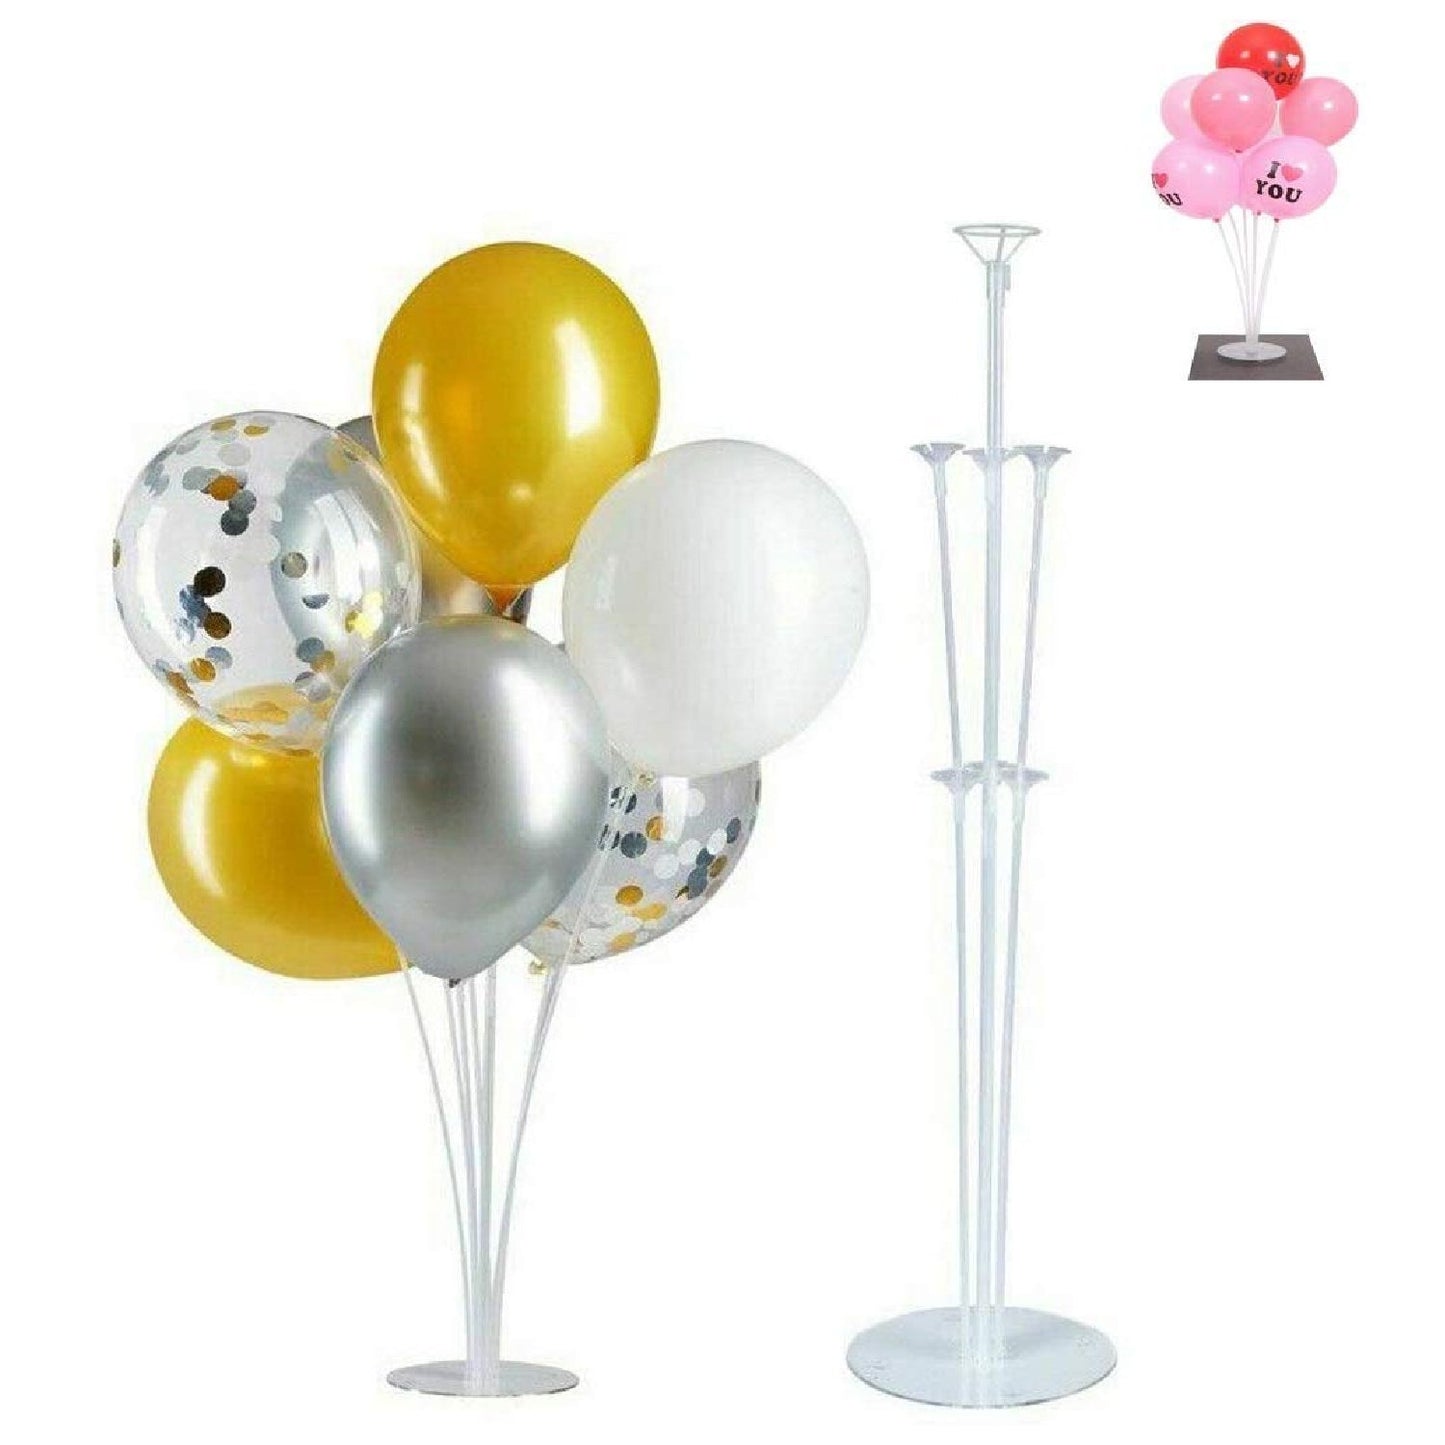 Balloon Column Stand | Balloon Arch Stand | Balloon Stand Decoration | Balloon Garland Stand